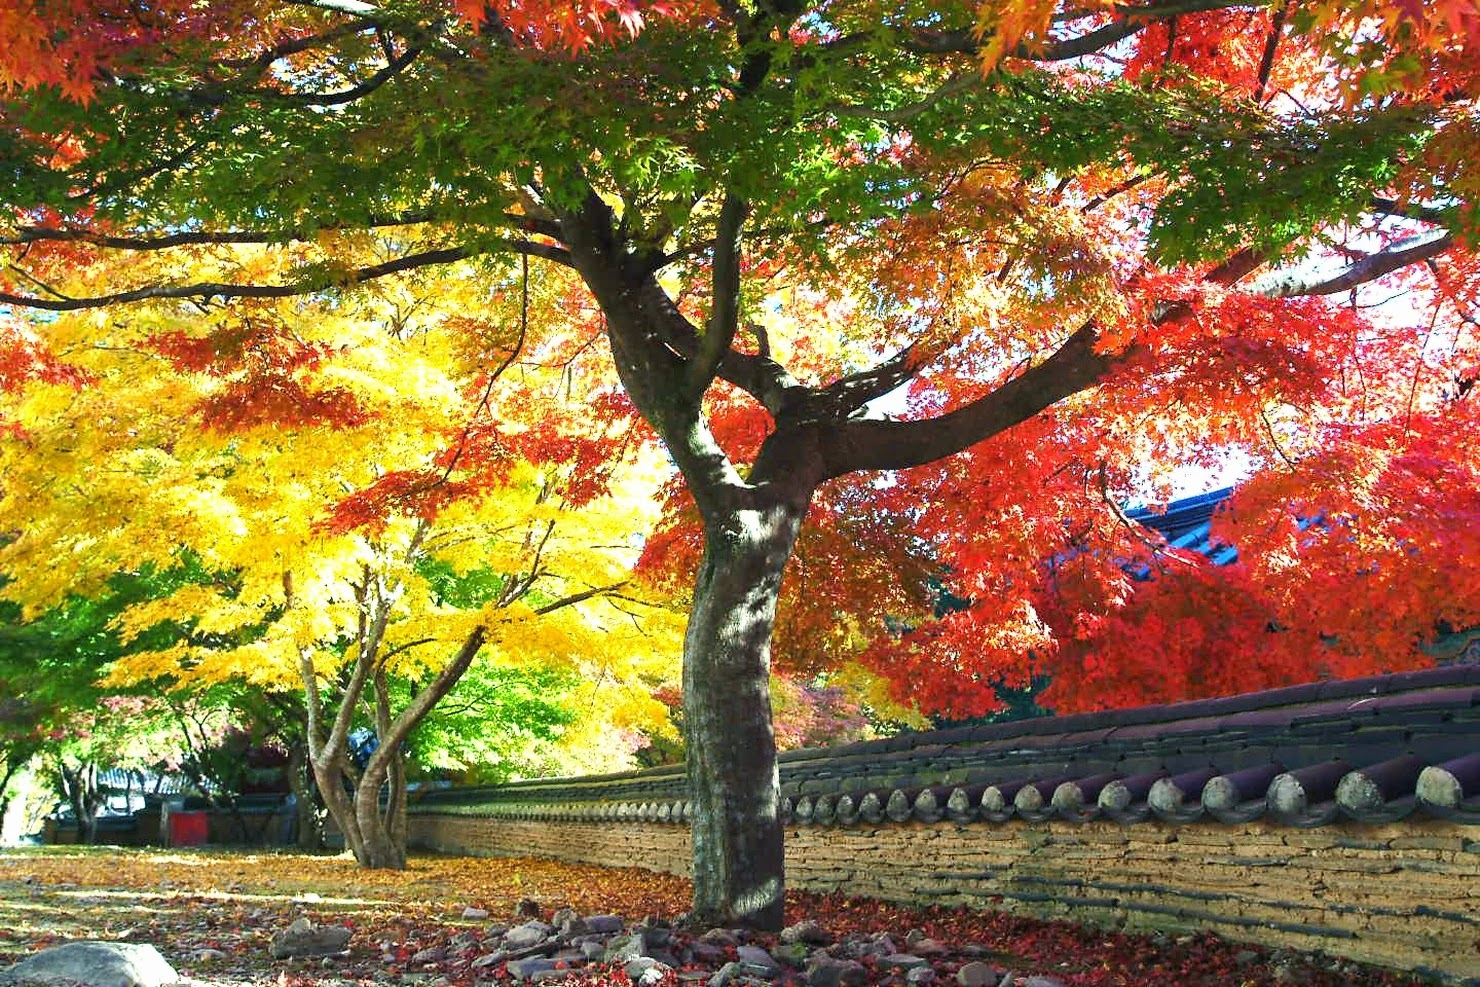 Now Korea is Autumn season and check our beautiful scenery! ~ KOREA